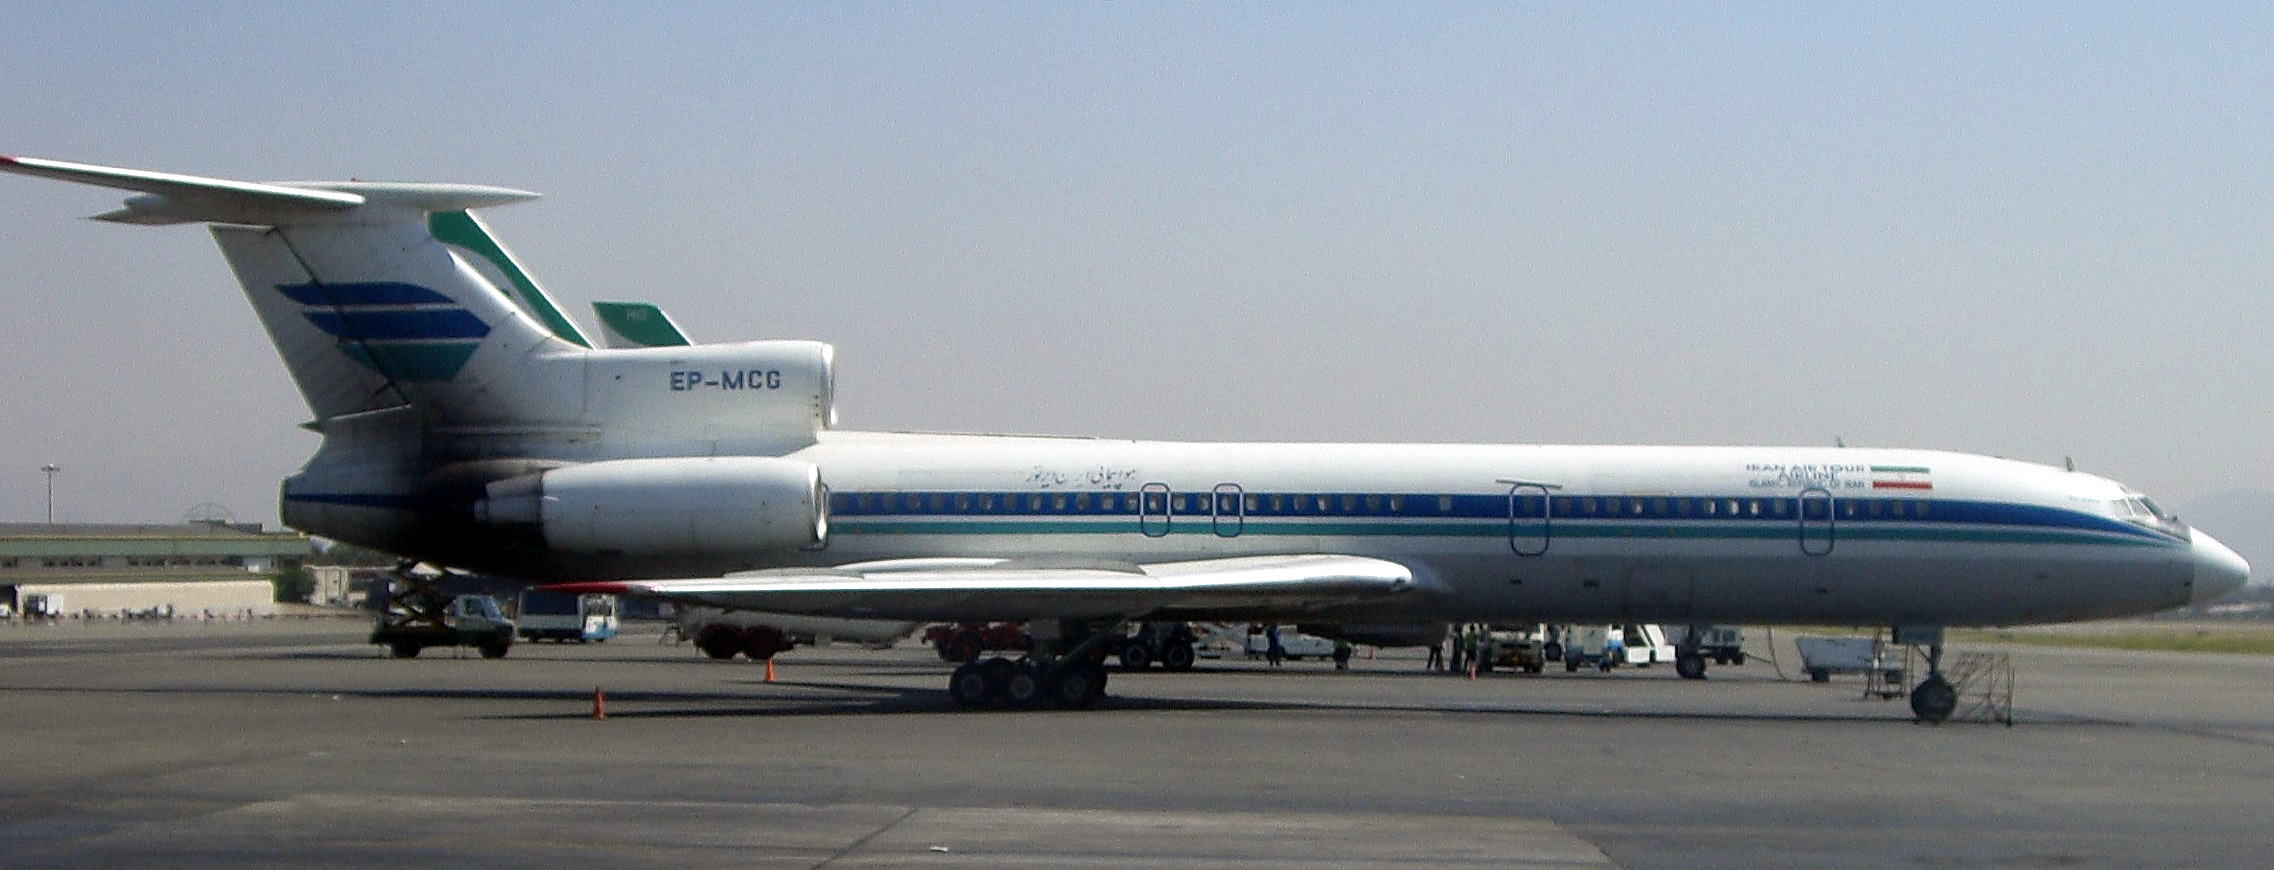 Chuyến bay 7908 của Caspian Airlines